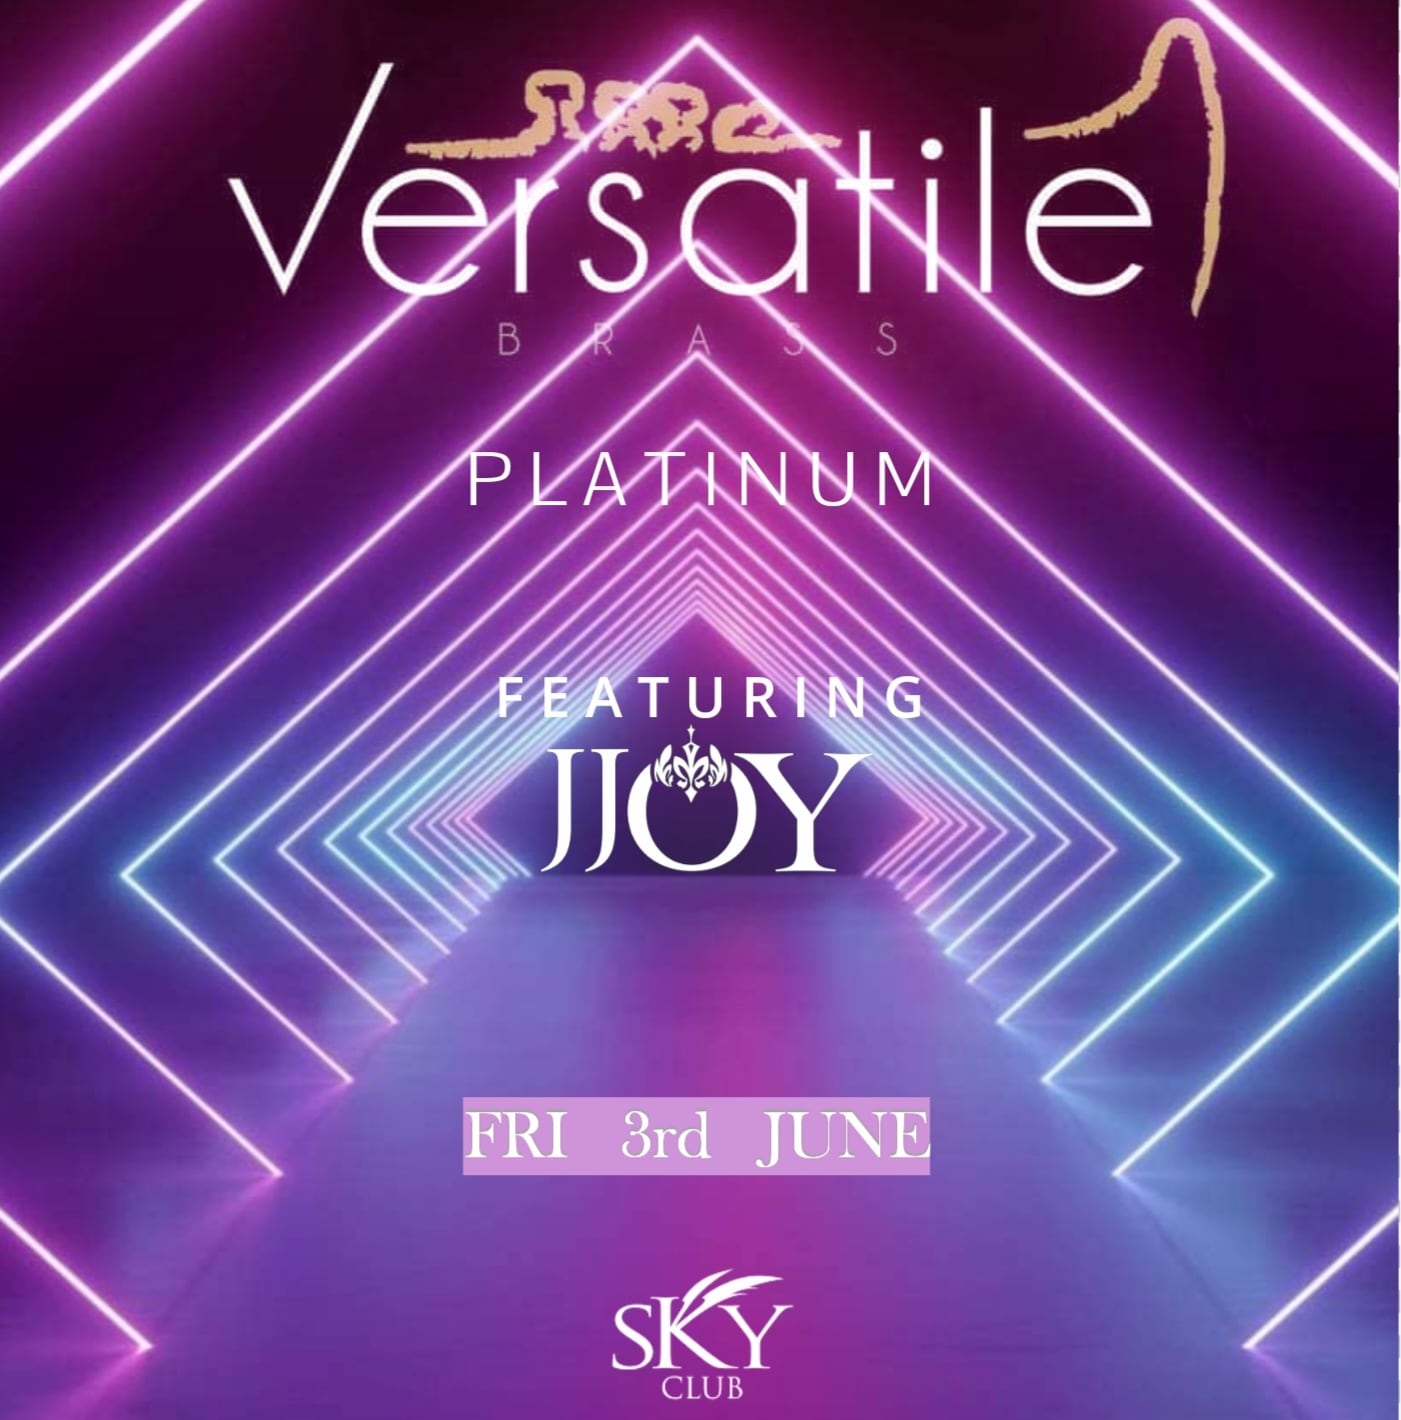 Versatile Brass Platinum featuring JJoy poster